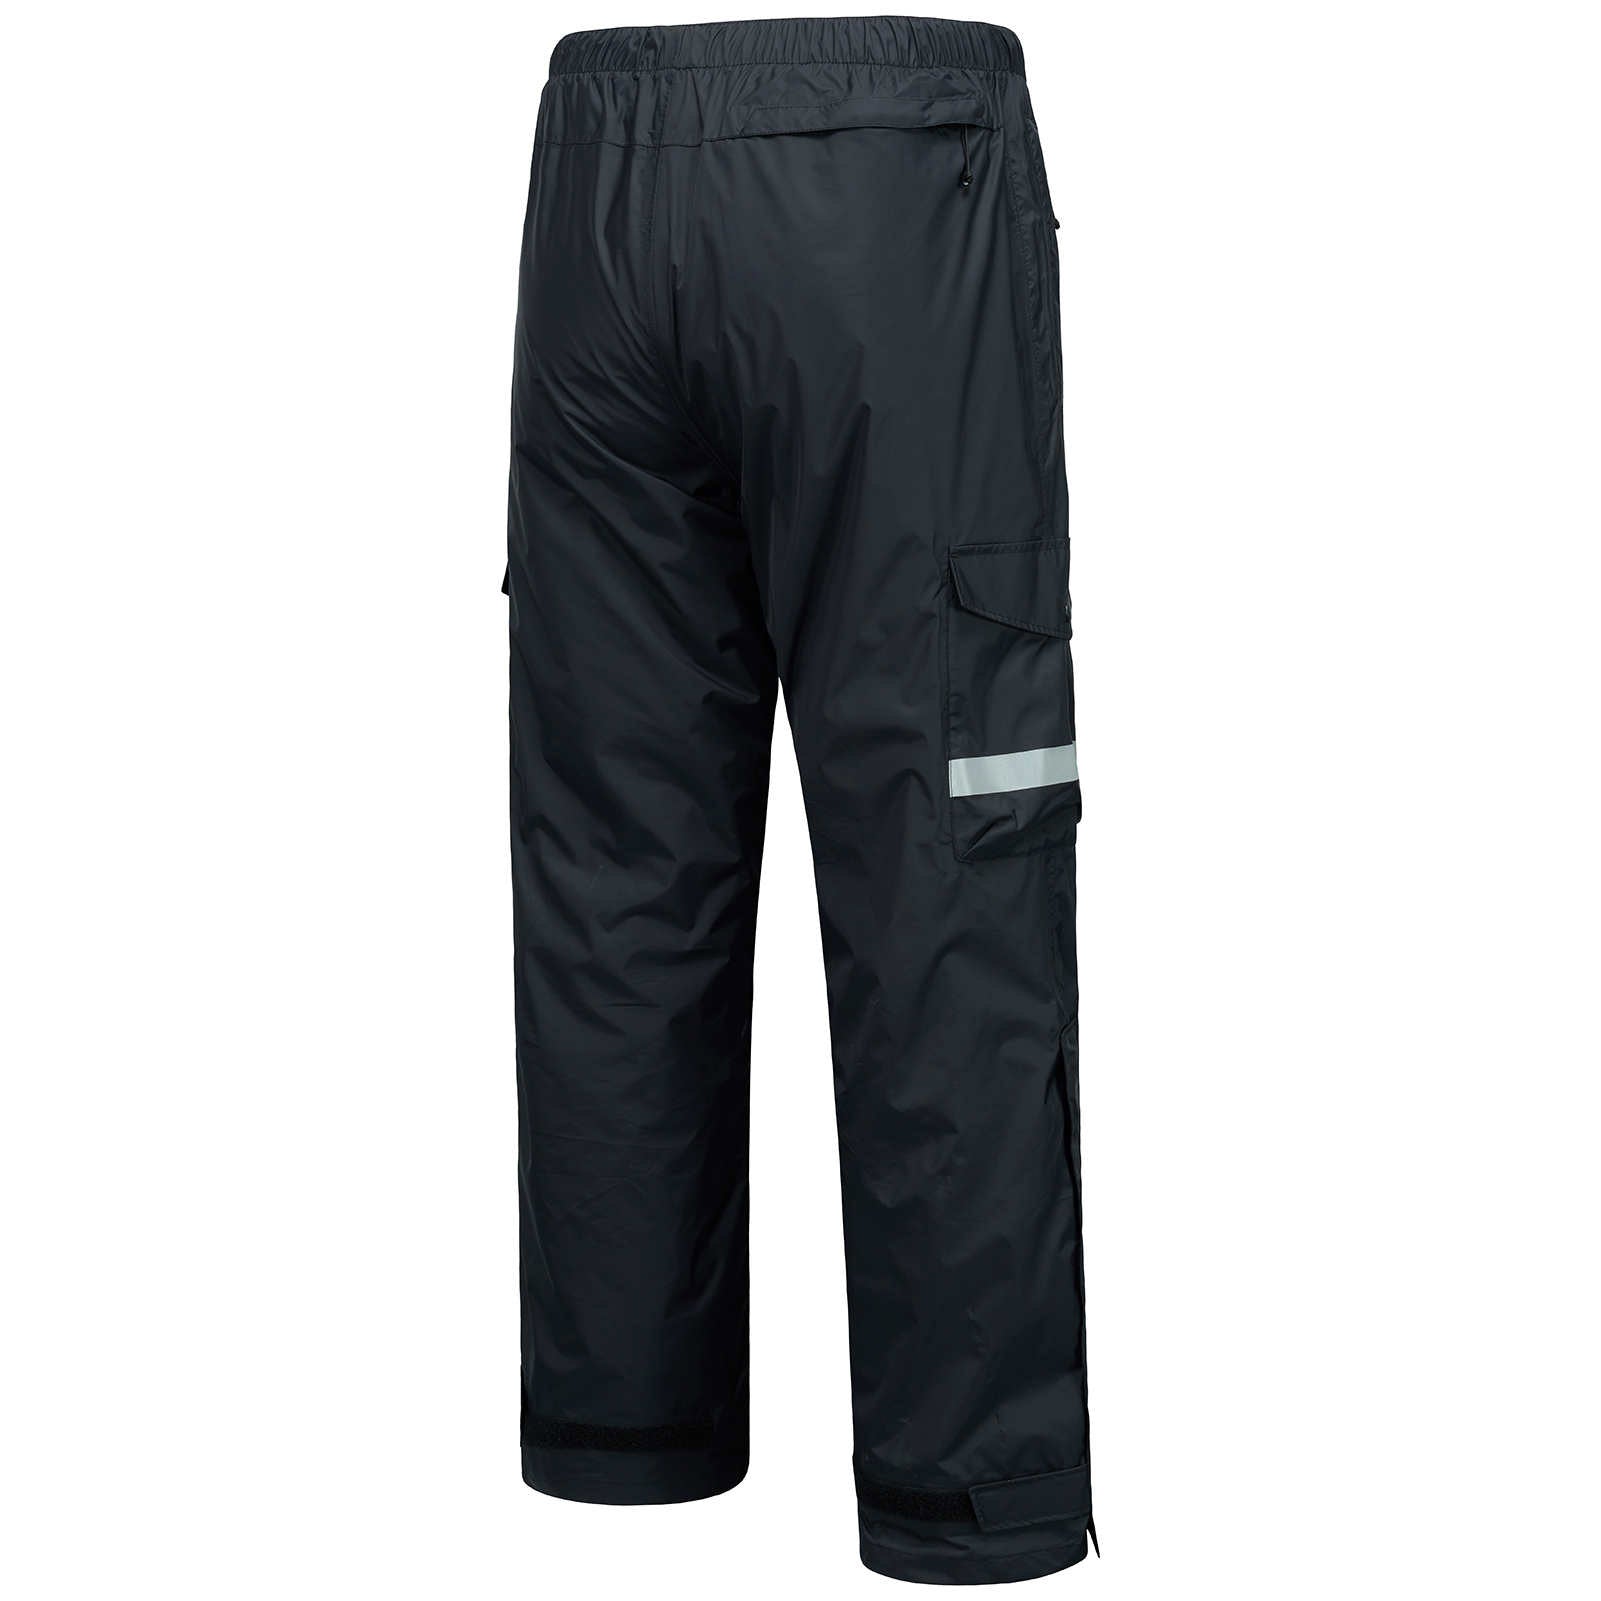 Men's Complete Breathable Waterproof Rain Pants with 1/2 Zip Legs